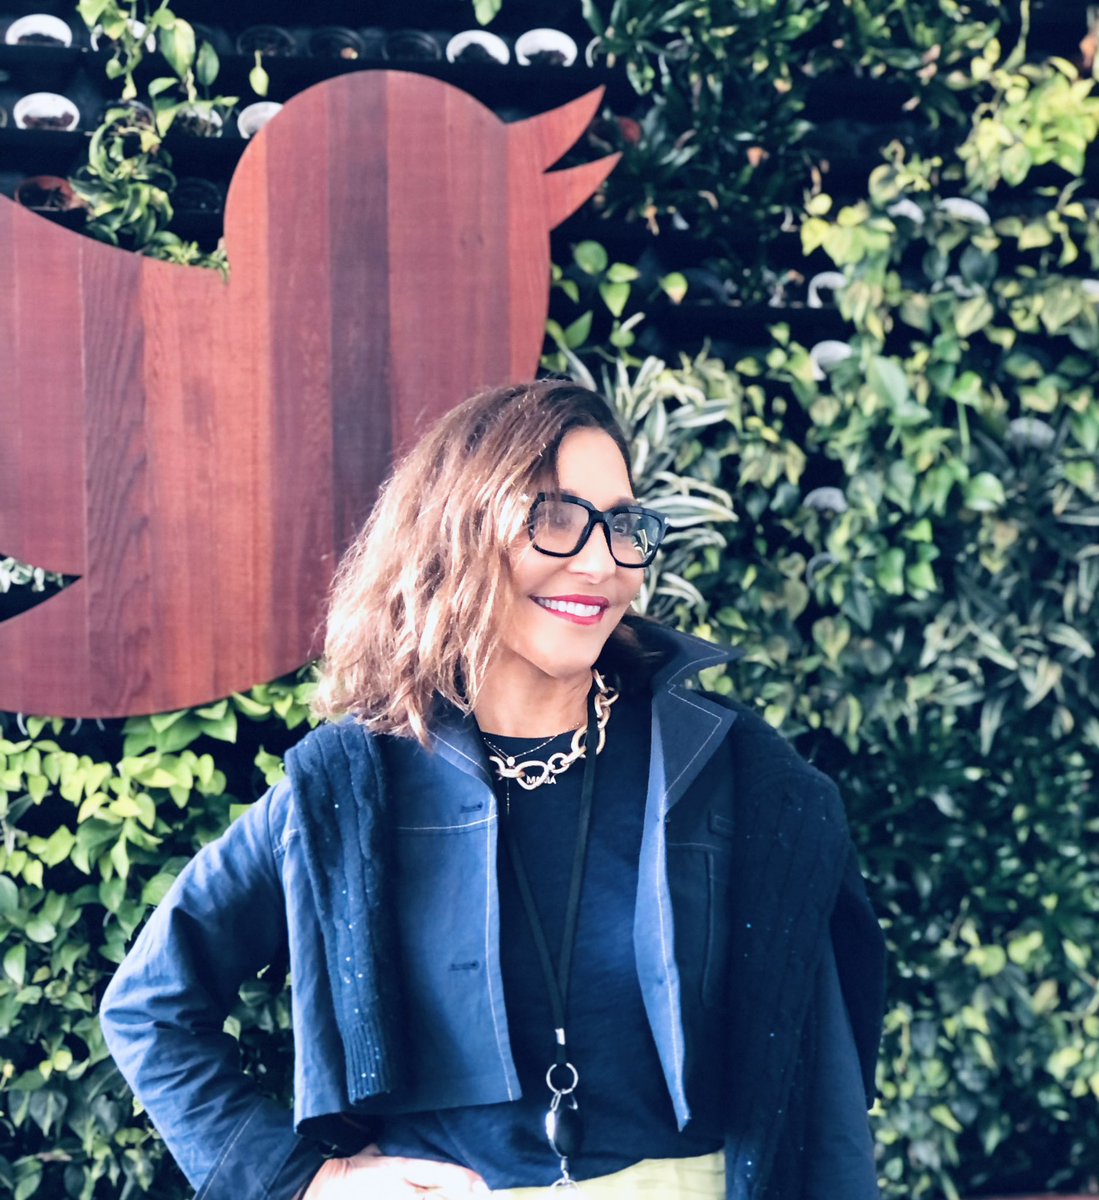 Linda Yaccarino takes charge as new Twitter CEO. 

Welcome to the team X @lindayacc  #timetofly

📸@benarroch_joe